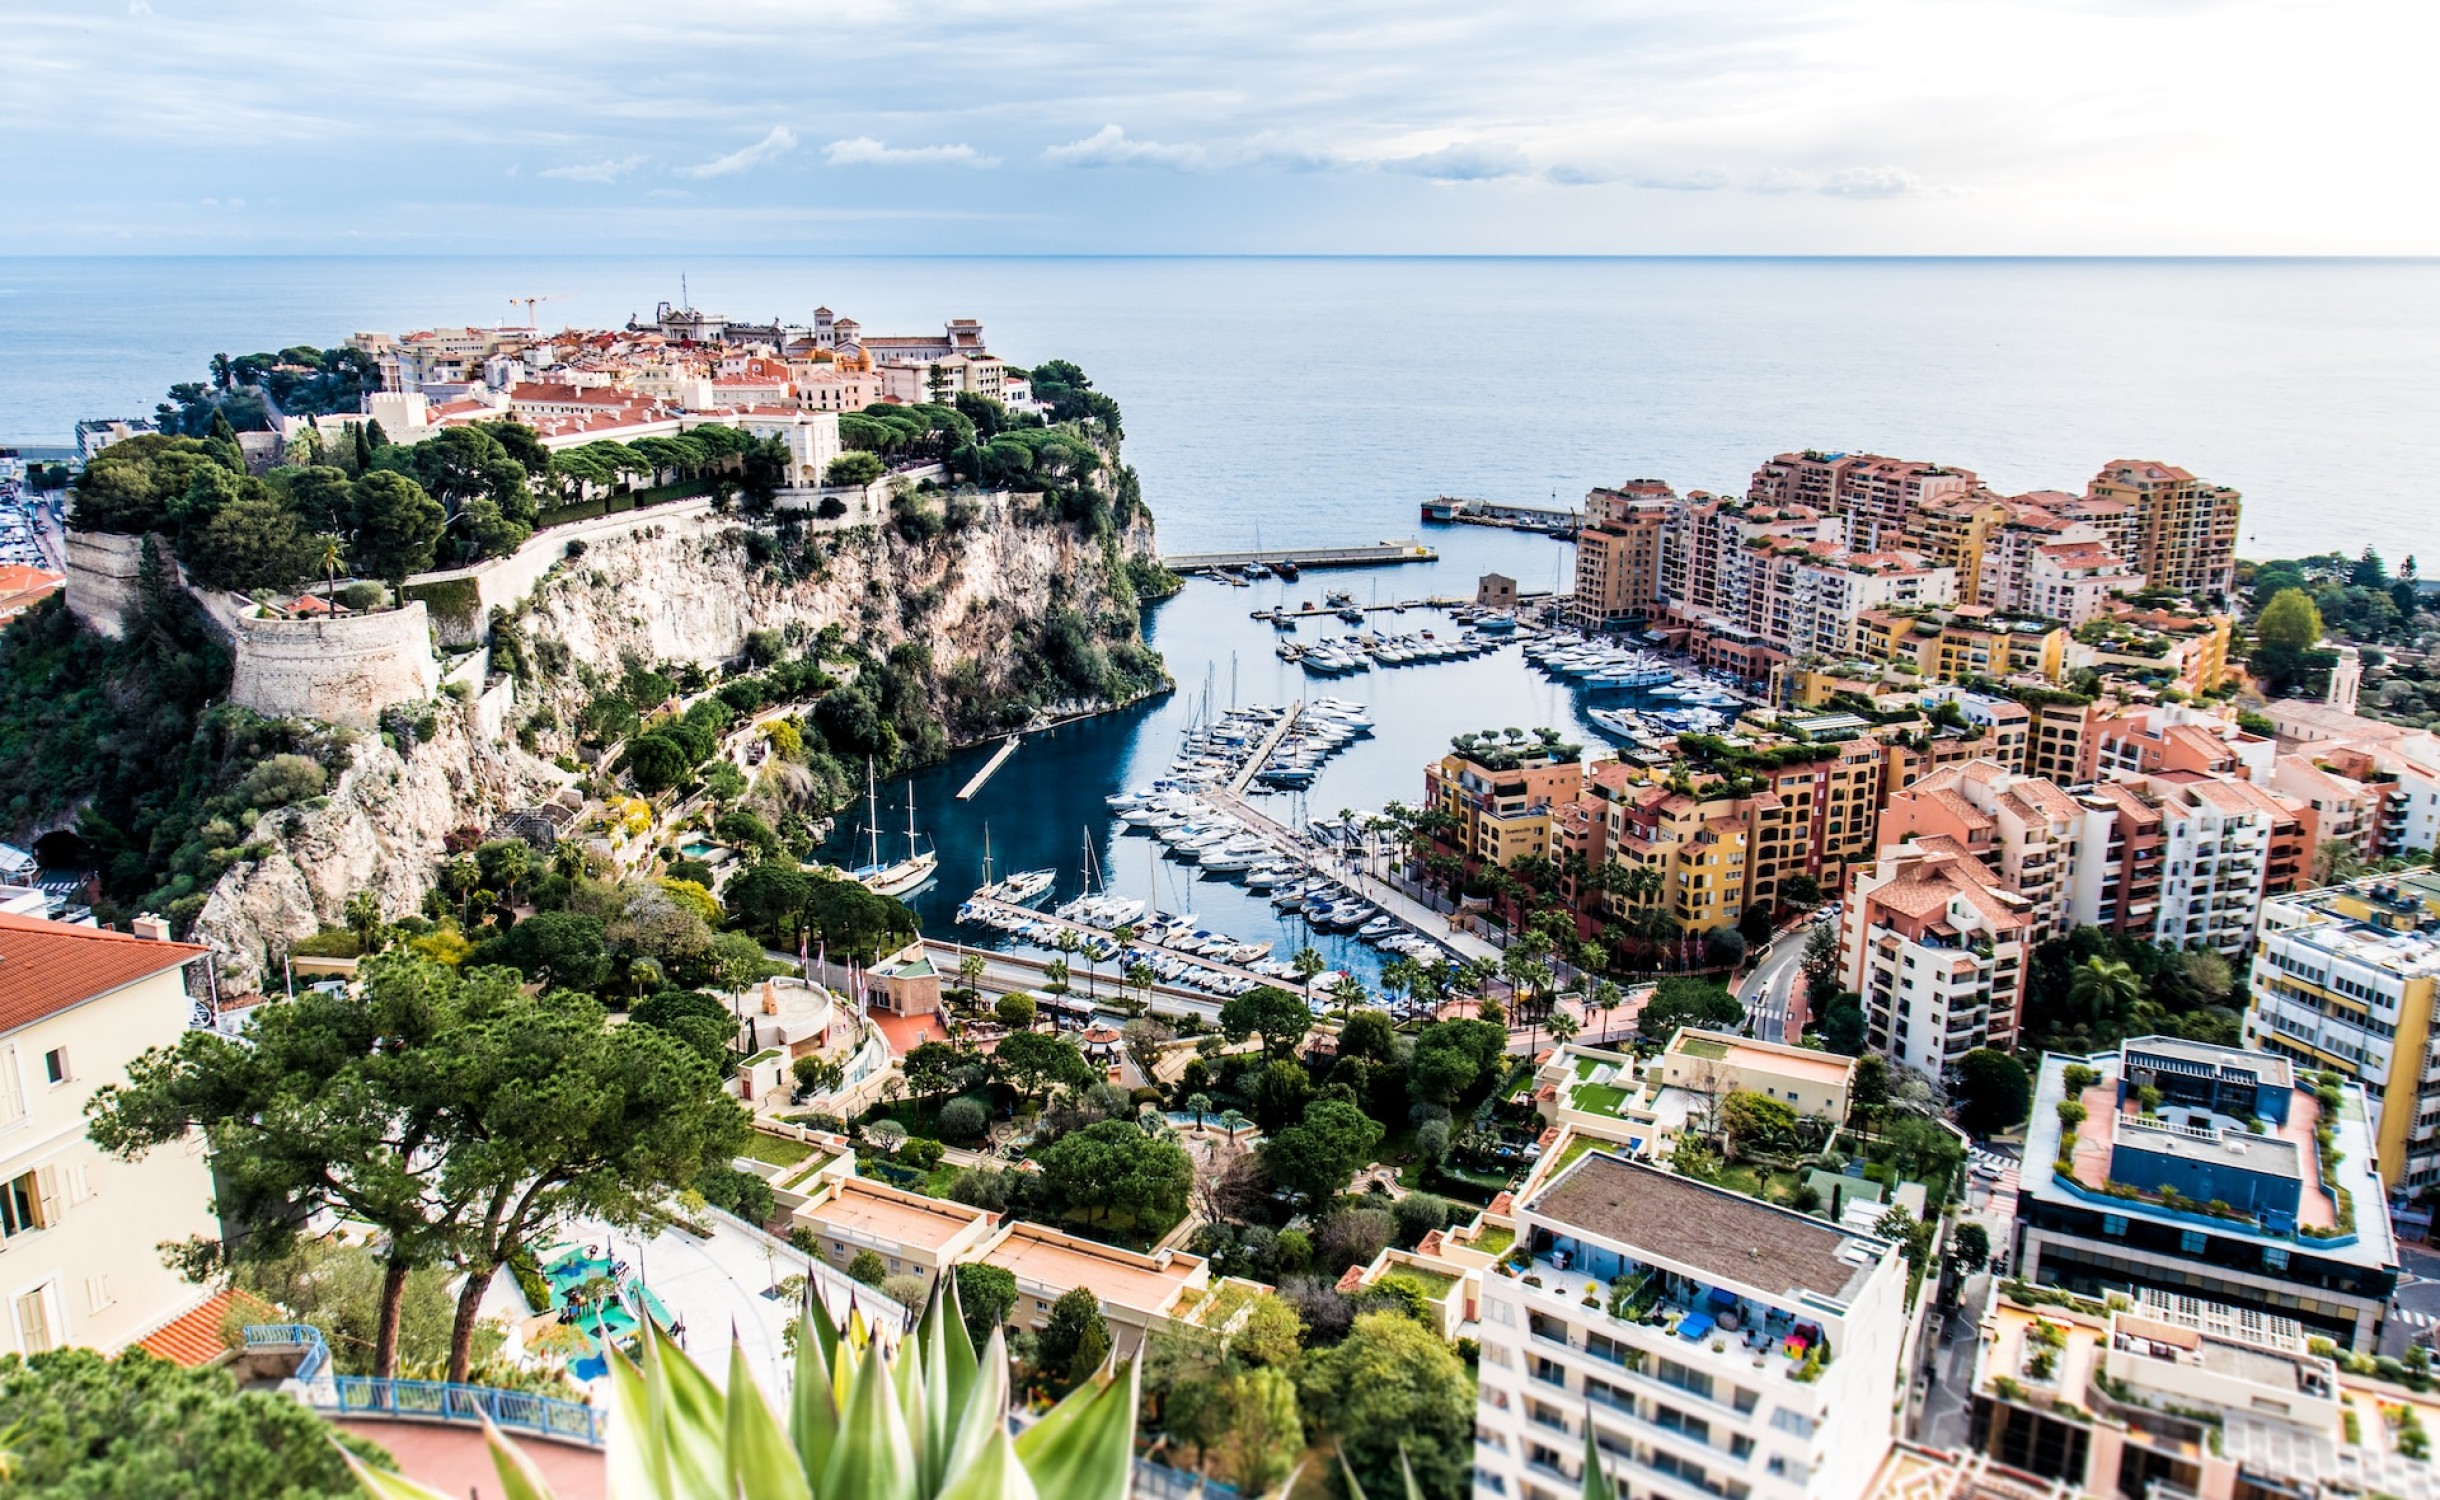 Conciergerie Monaco: a personalized luxury experience